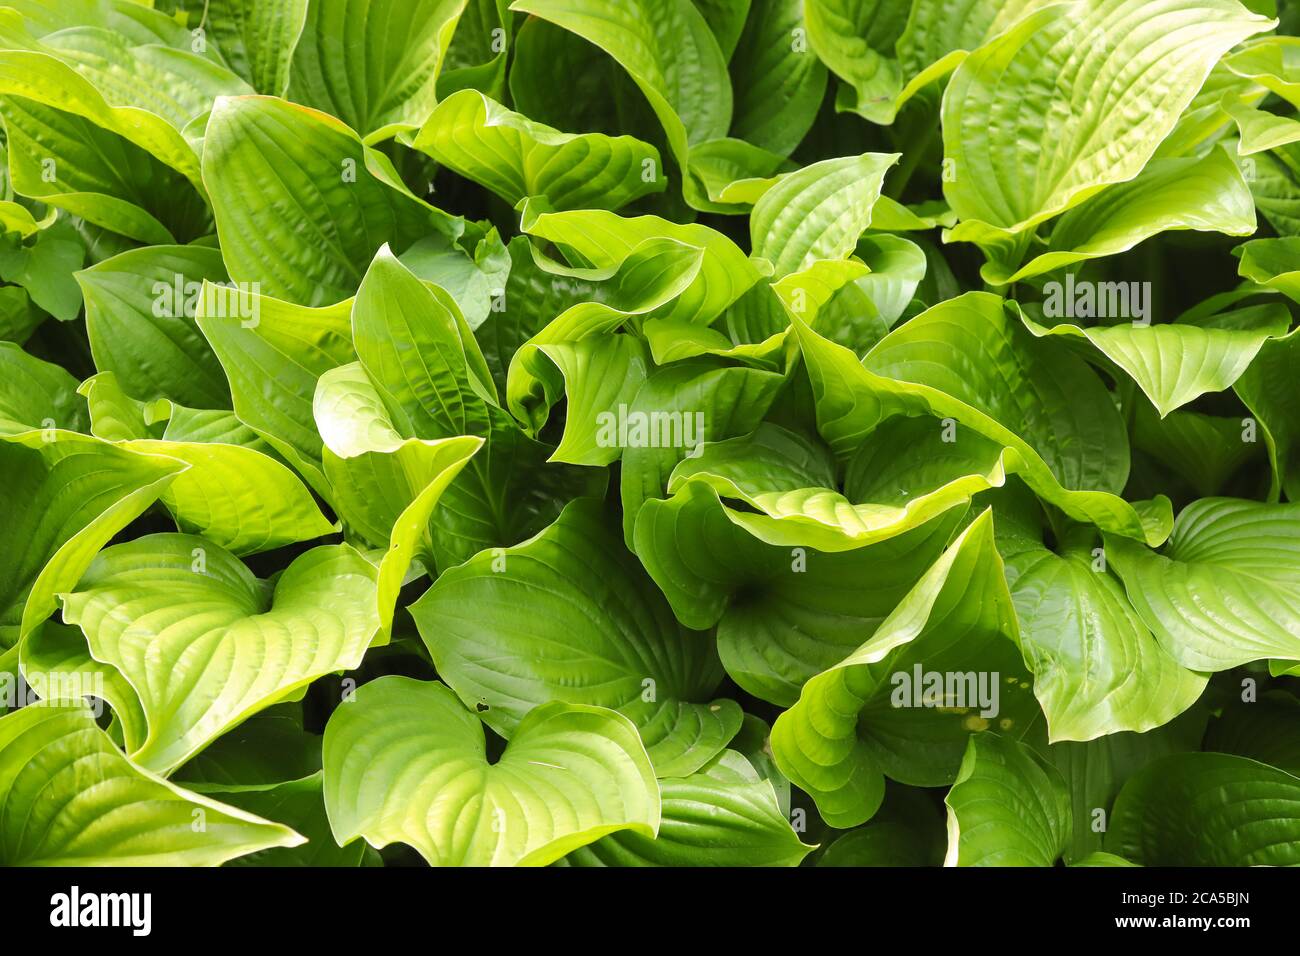 Primo piano di foglie di osta verdi fresche Foto Stock